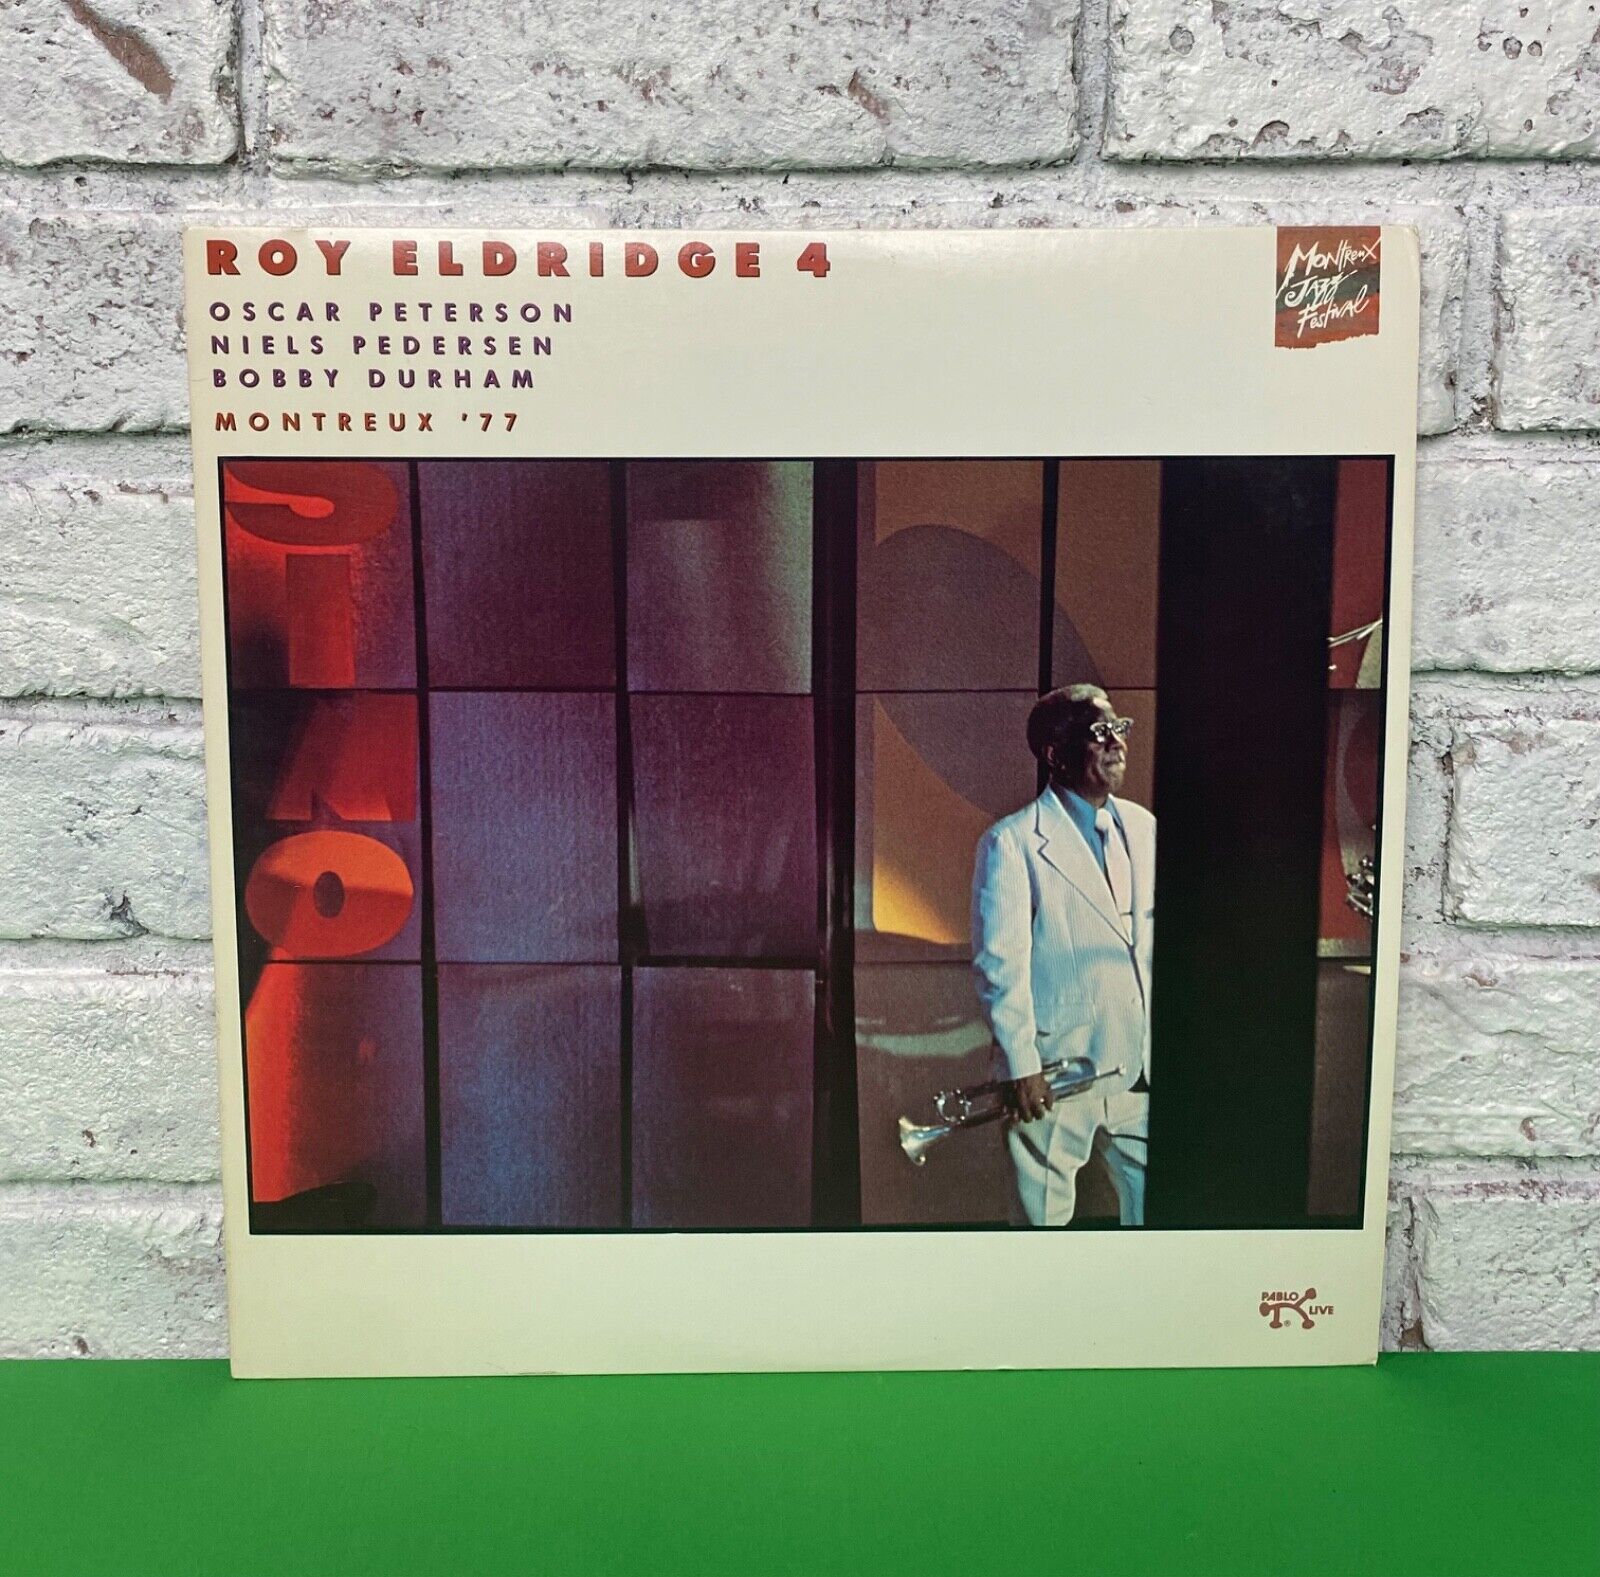 Vintage 1989 Remastered Roy Eldridge 4 - MONTREUX '77 PABLO Records OJC-373